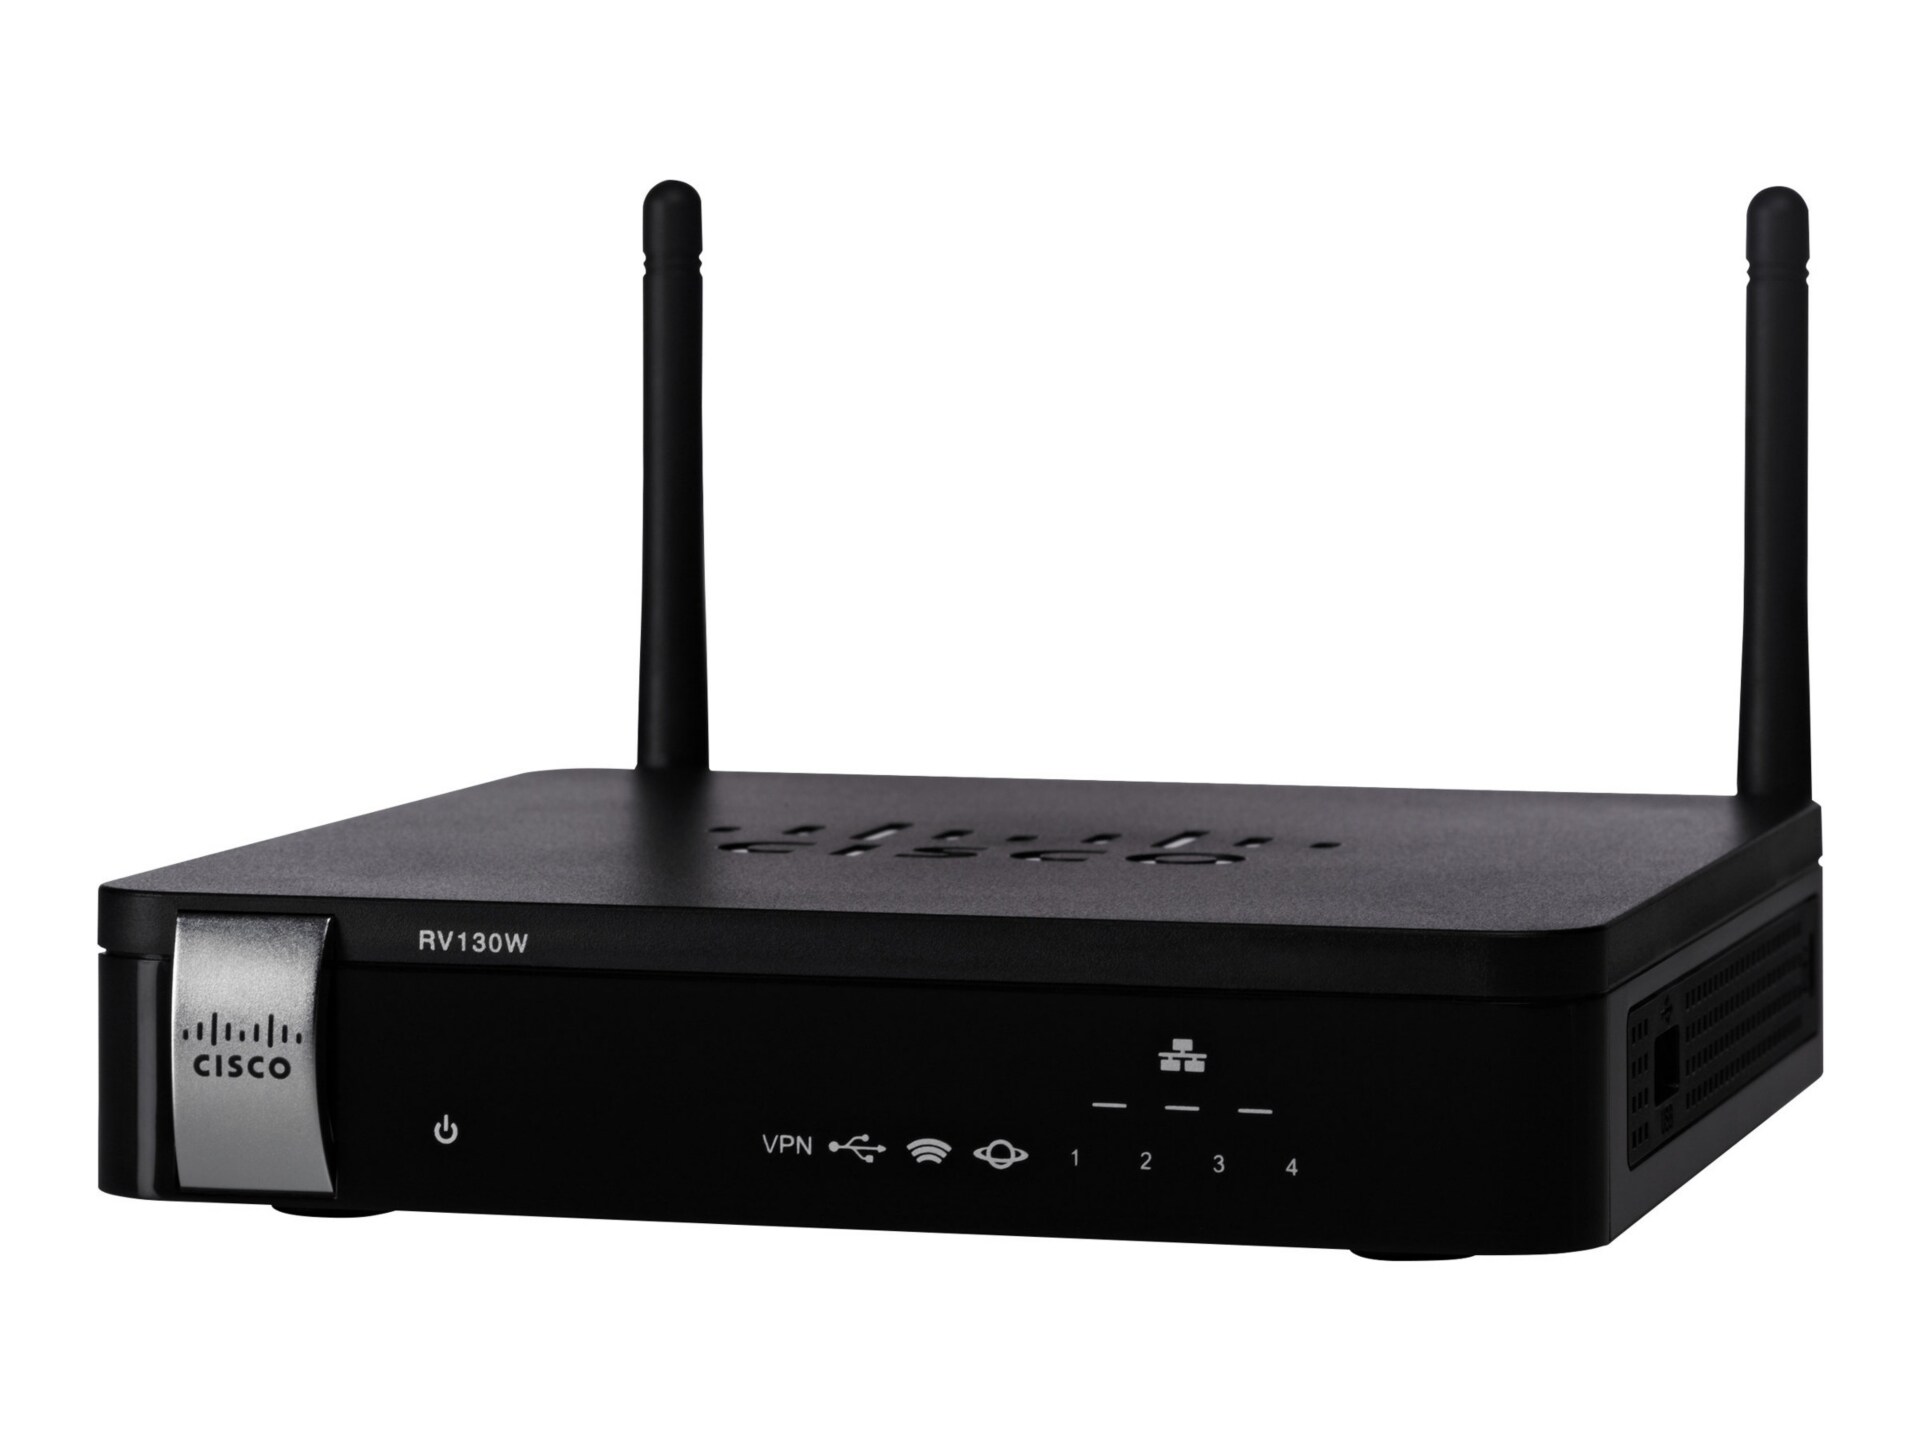 Cisco Small Business RV130W Wireless Router